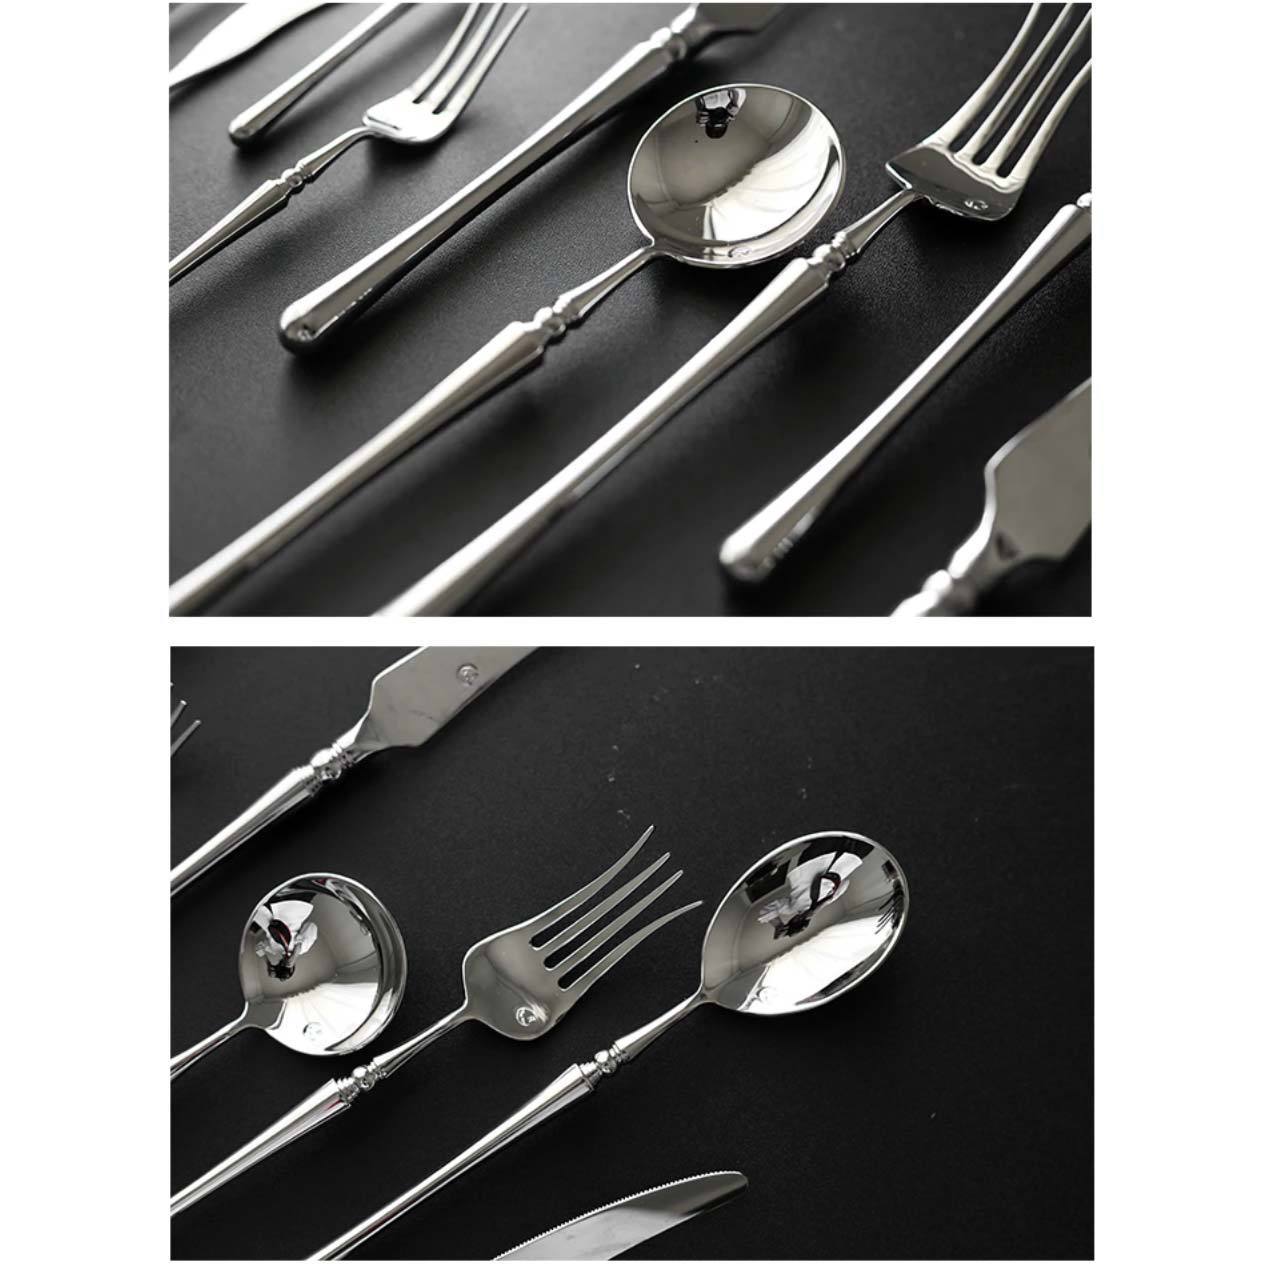 Antique Metal Cutlery - Nordic Side - 